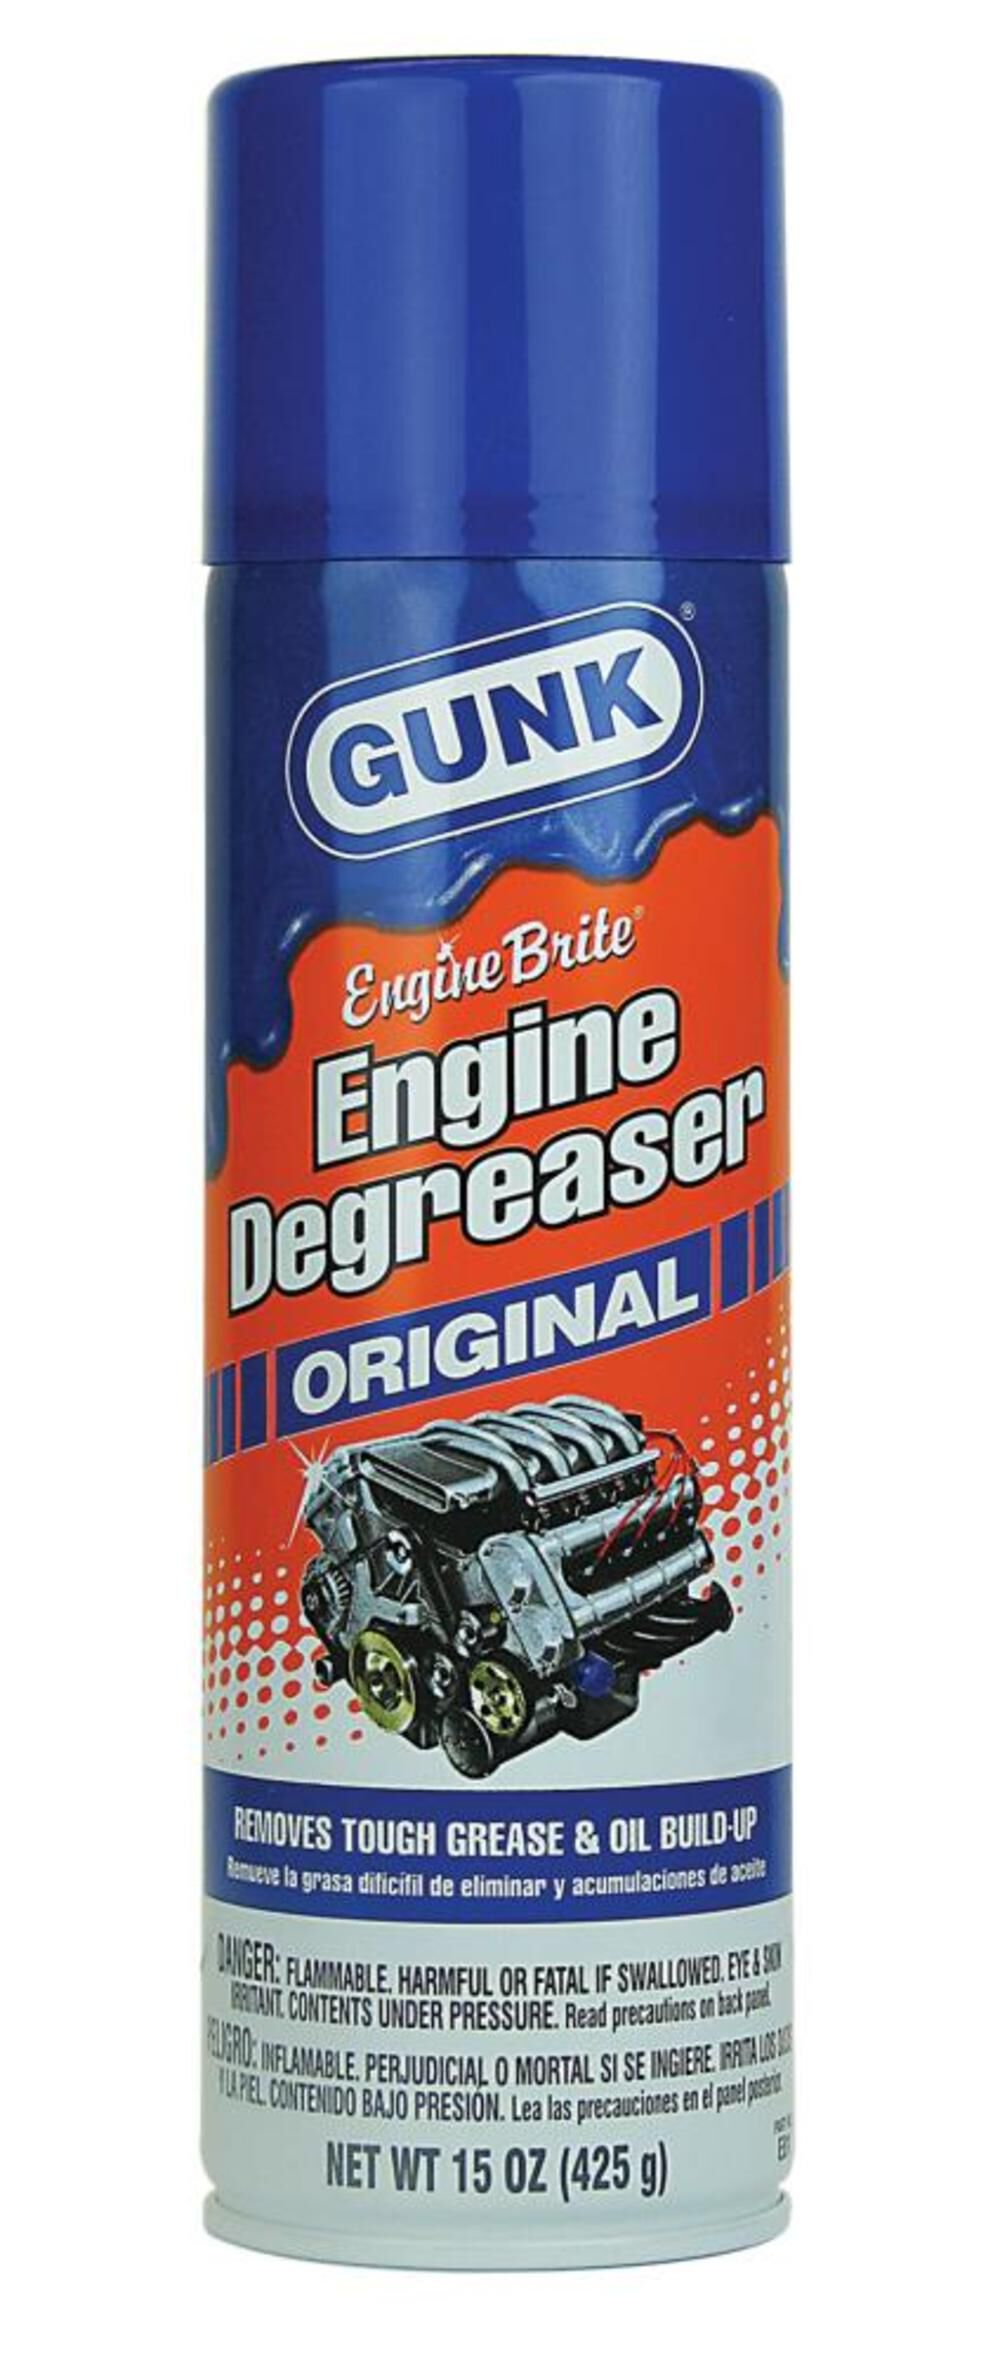 Gunk Engine Degreaser Original EB1 from Gunk - Acme Tools